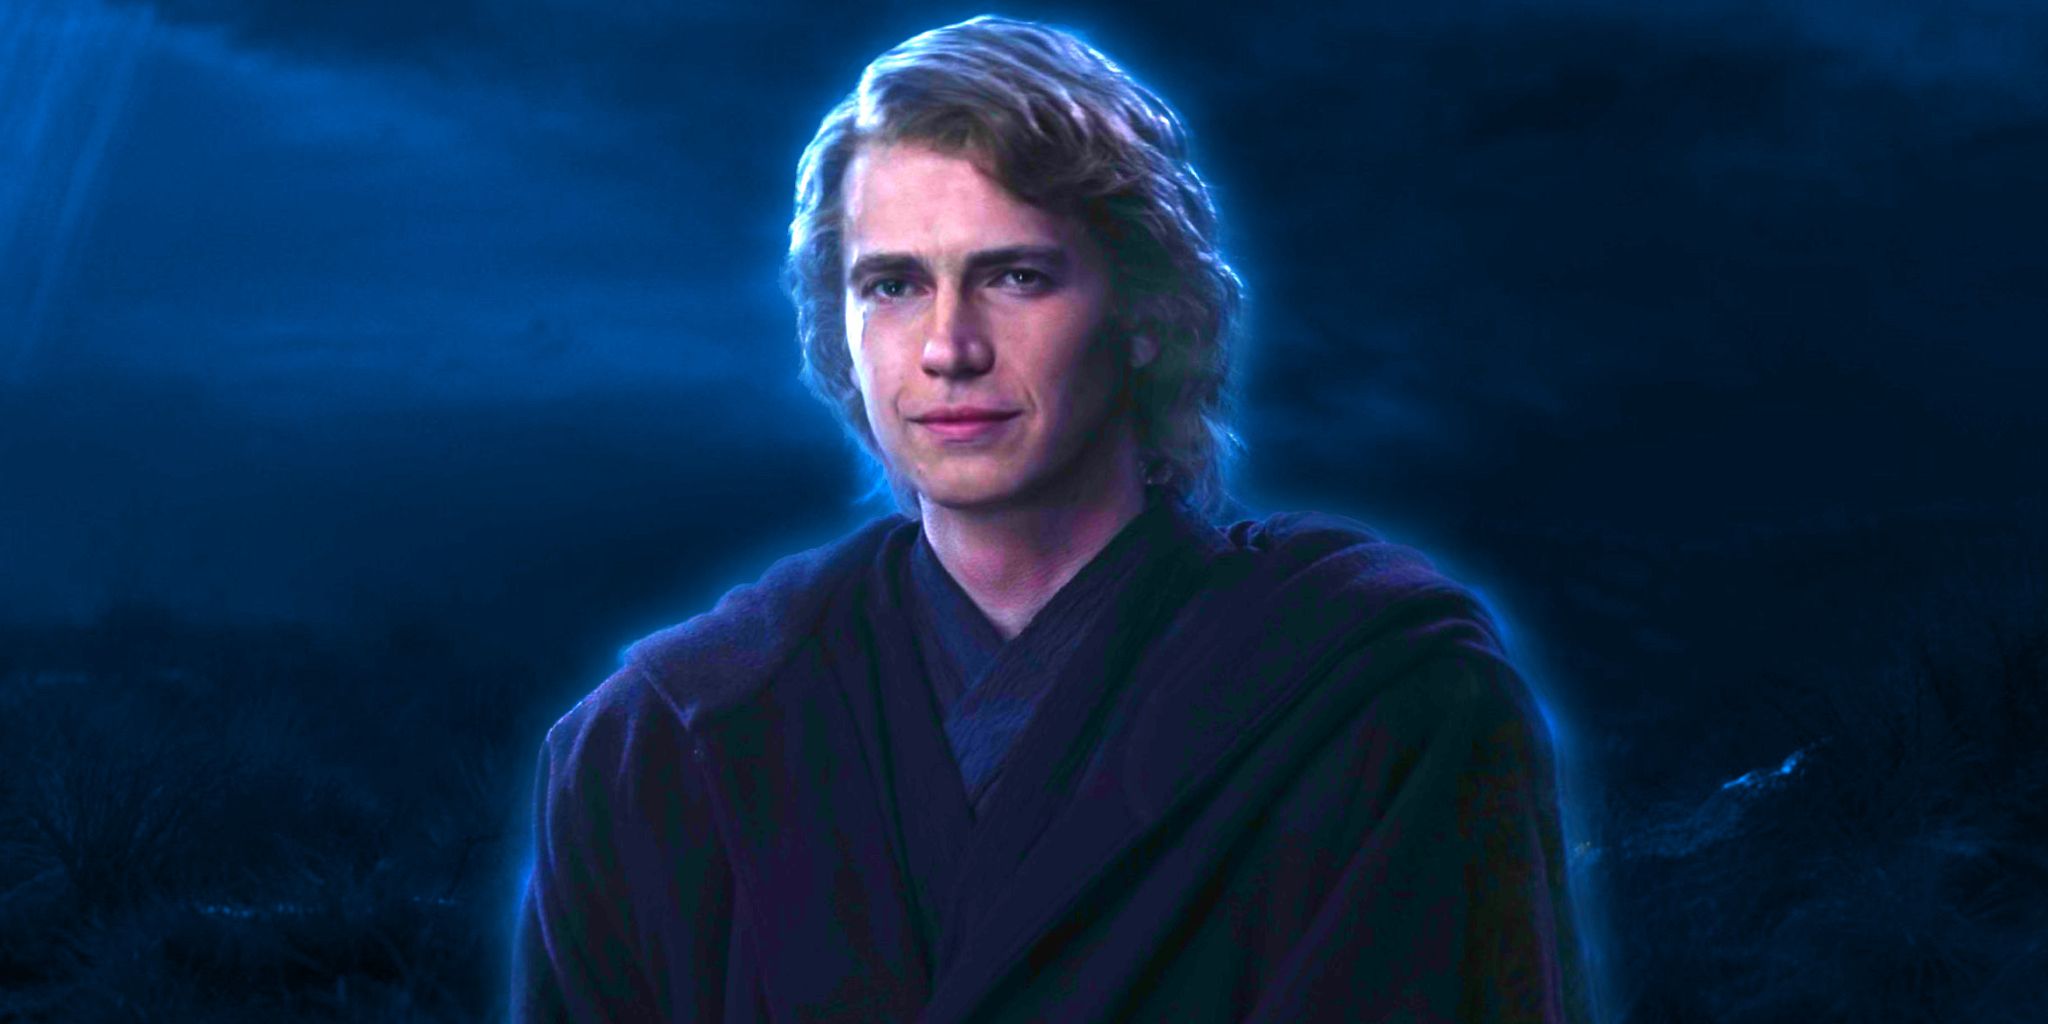 Hayden Christensen as Anakin Skywalker looks down upon Ahsoka as a Force ghost